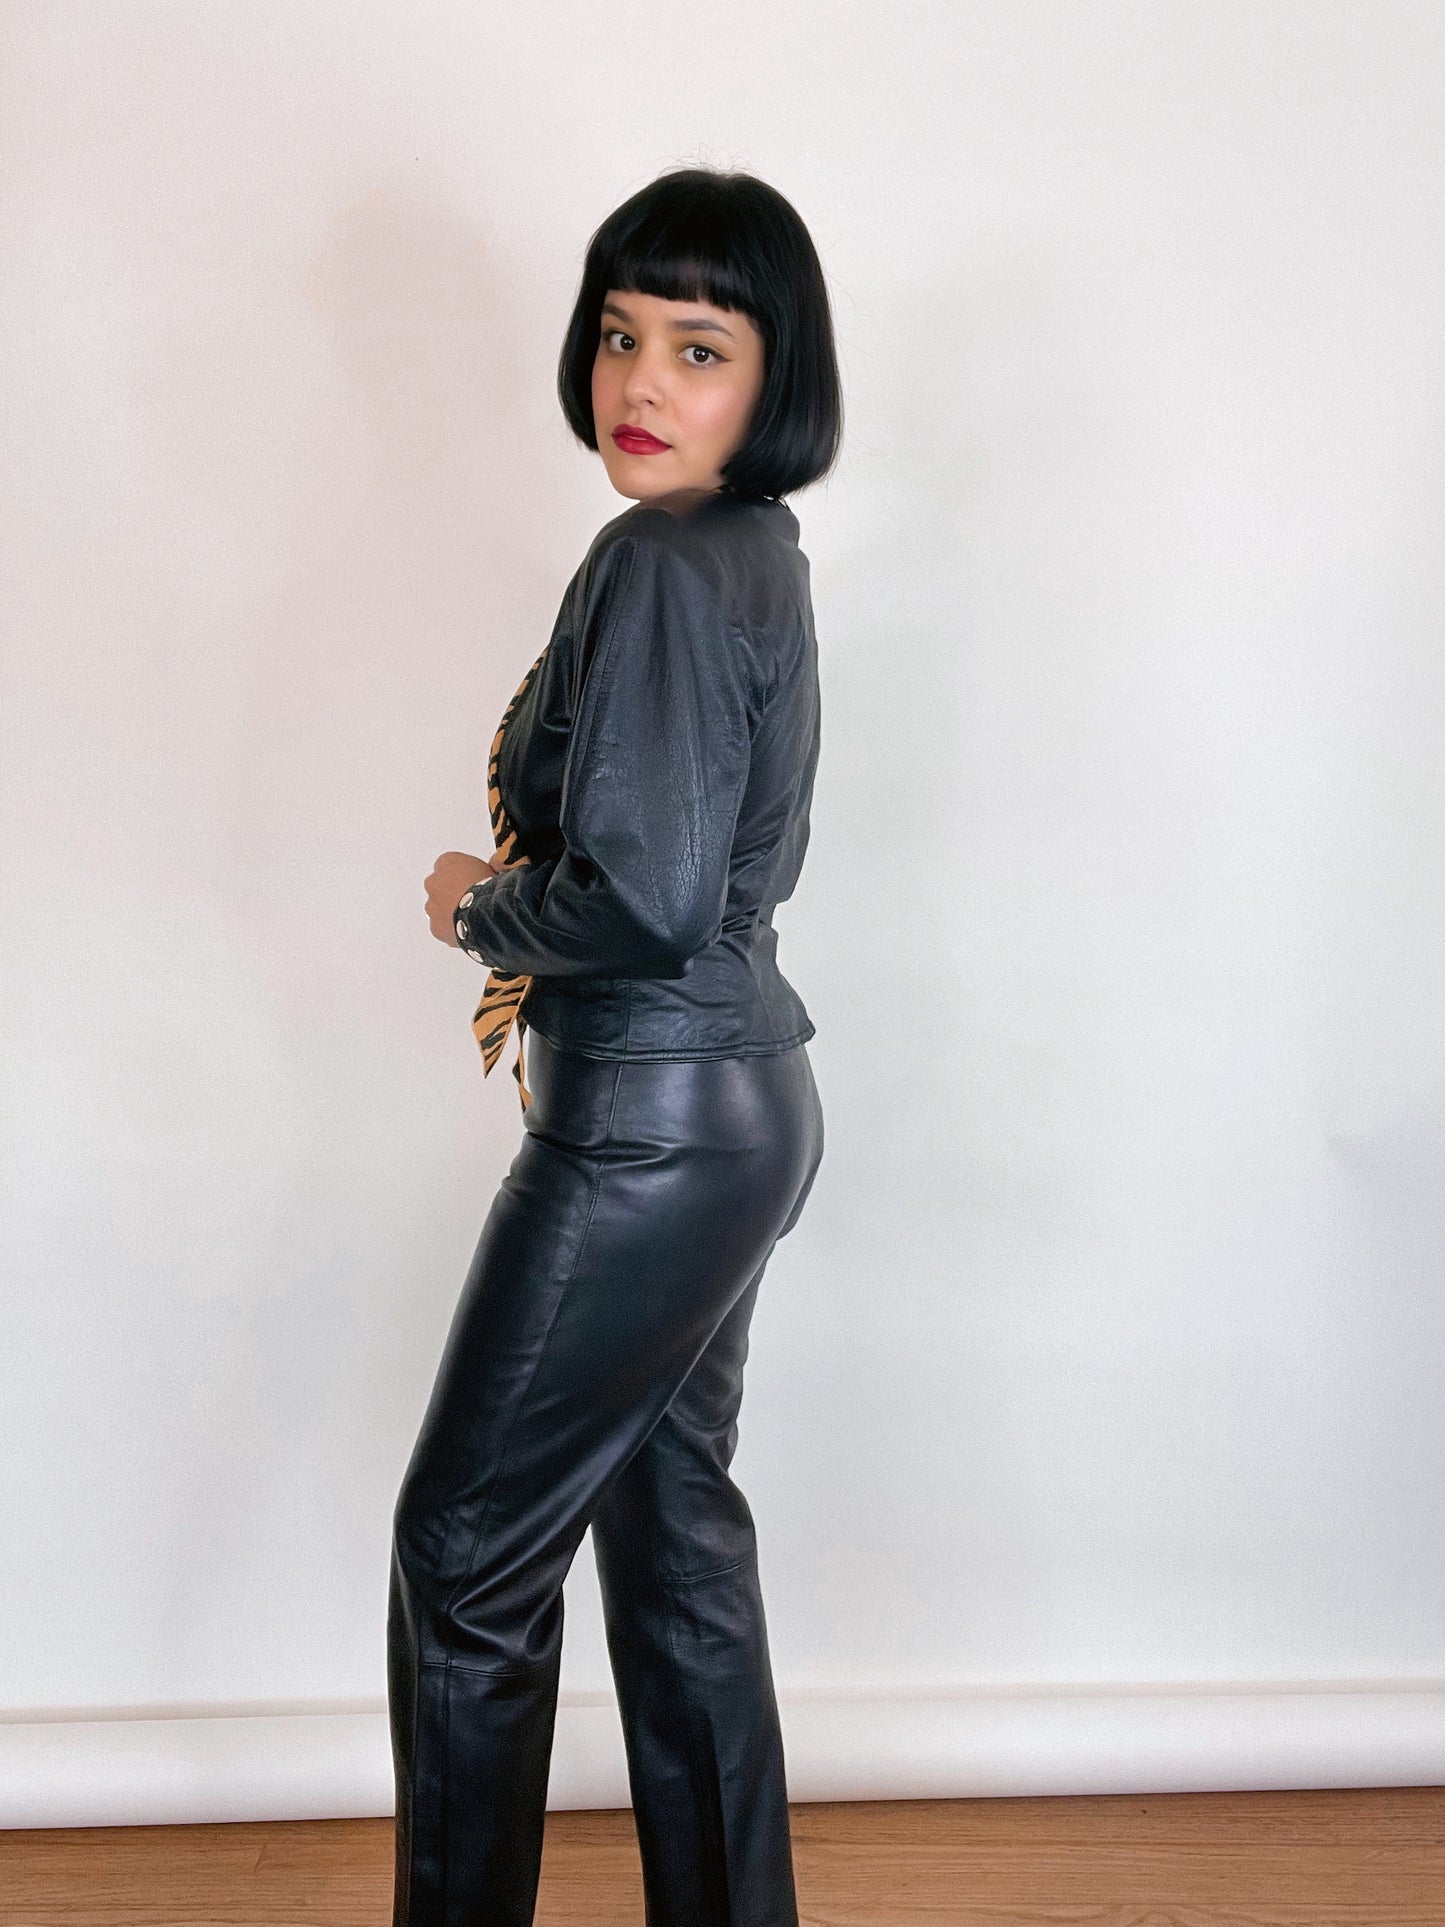 Vintage 80s "Terra Luna" Leather Peplum Studded Jacket Best Fits Sizes XS-S